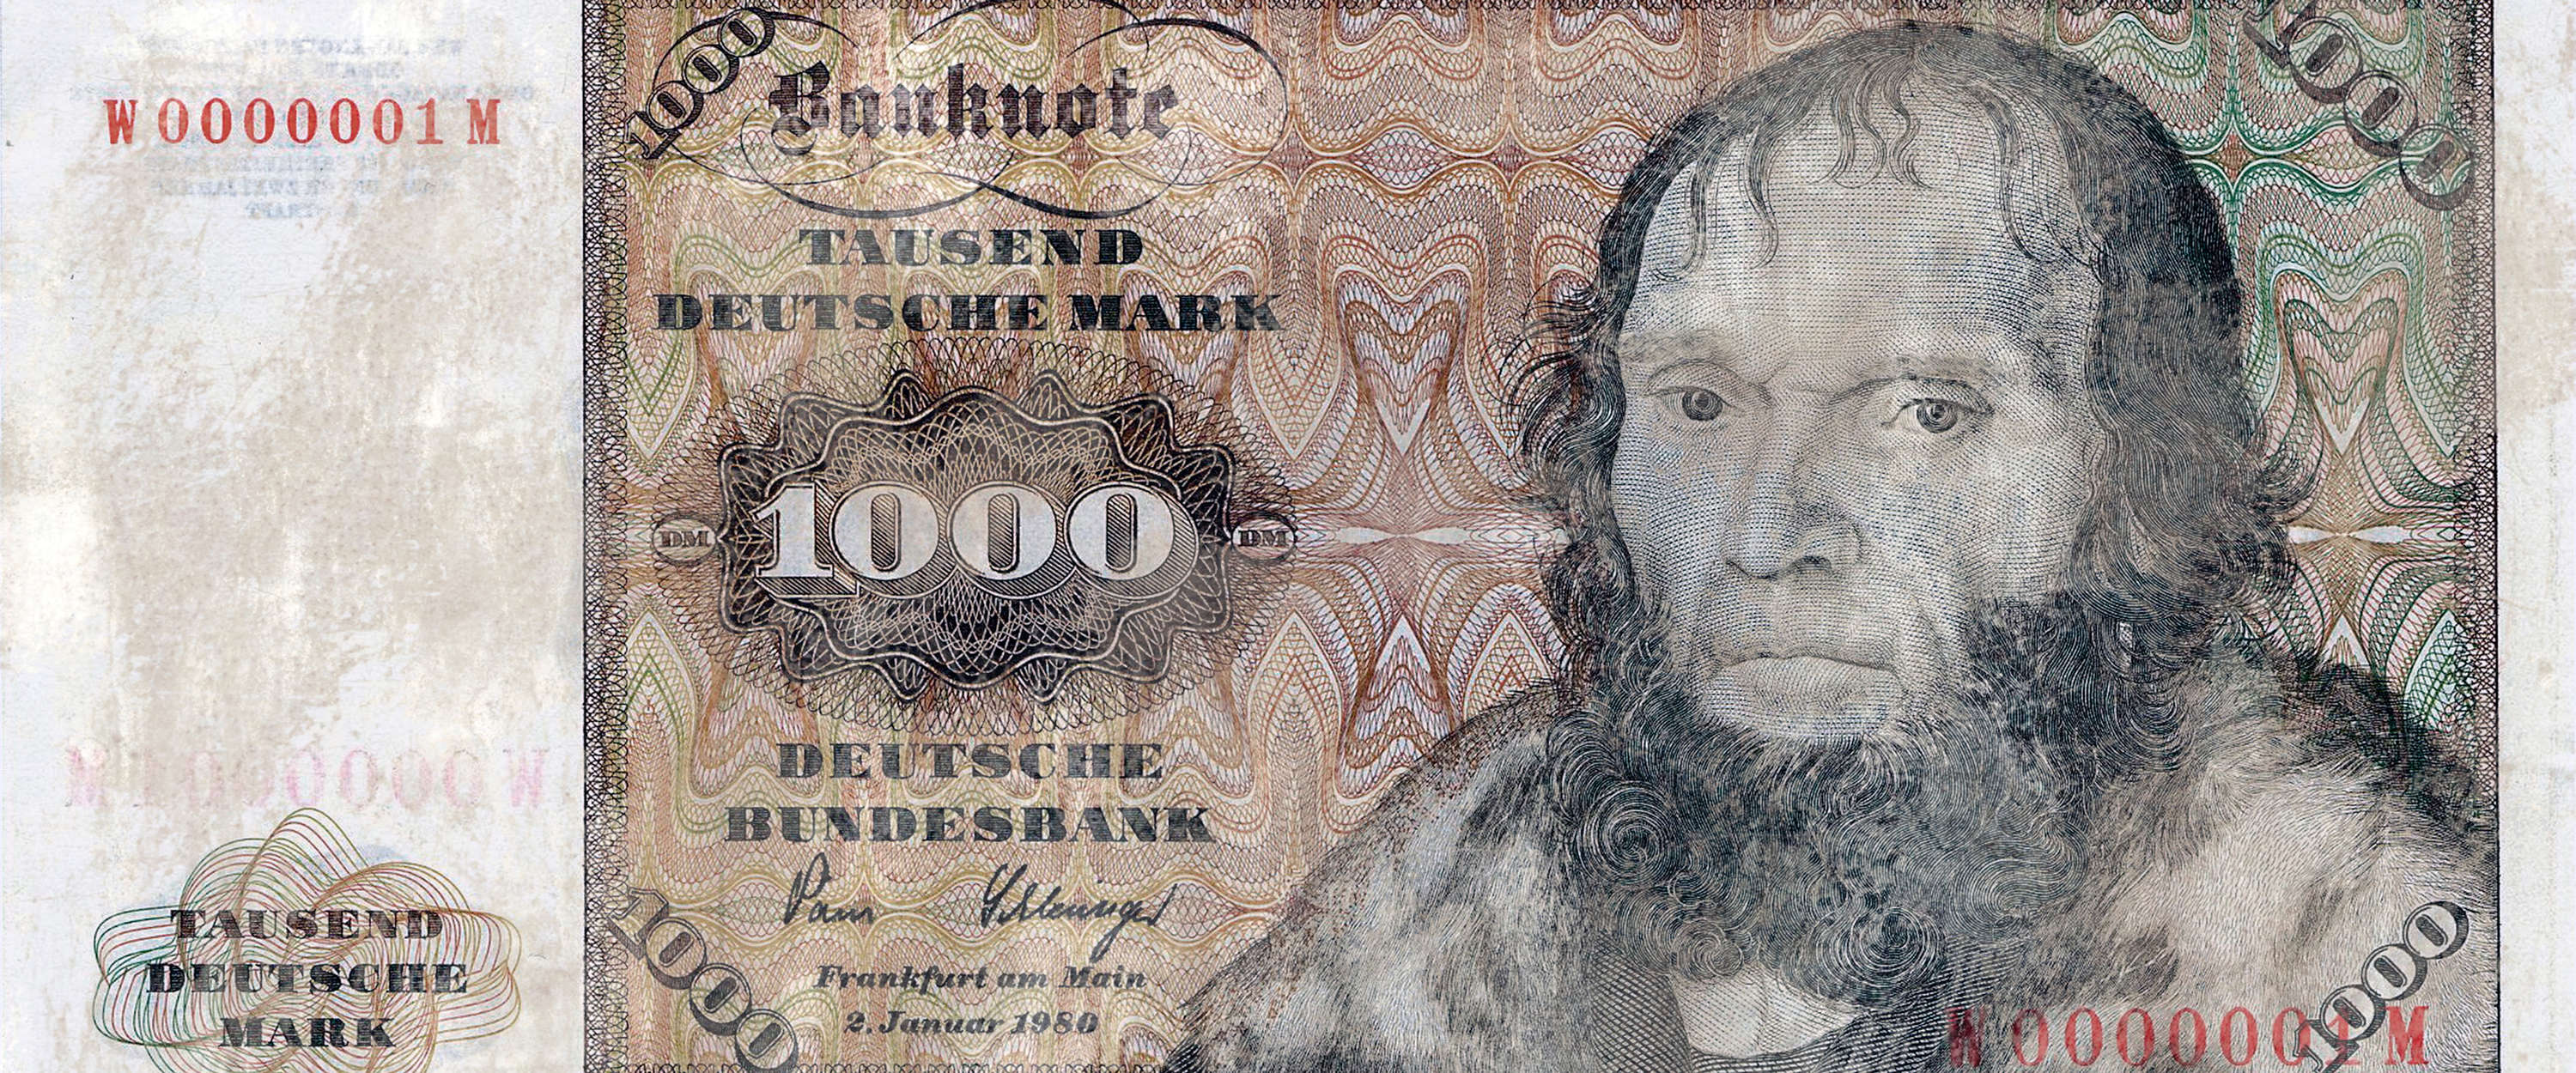             Mural histórico de billetes de banco - Mil marcos
        